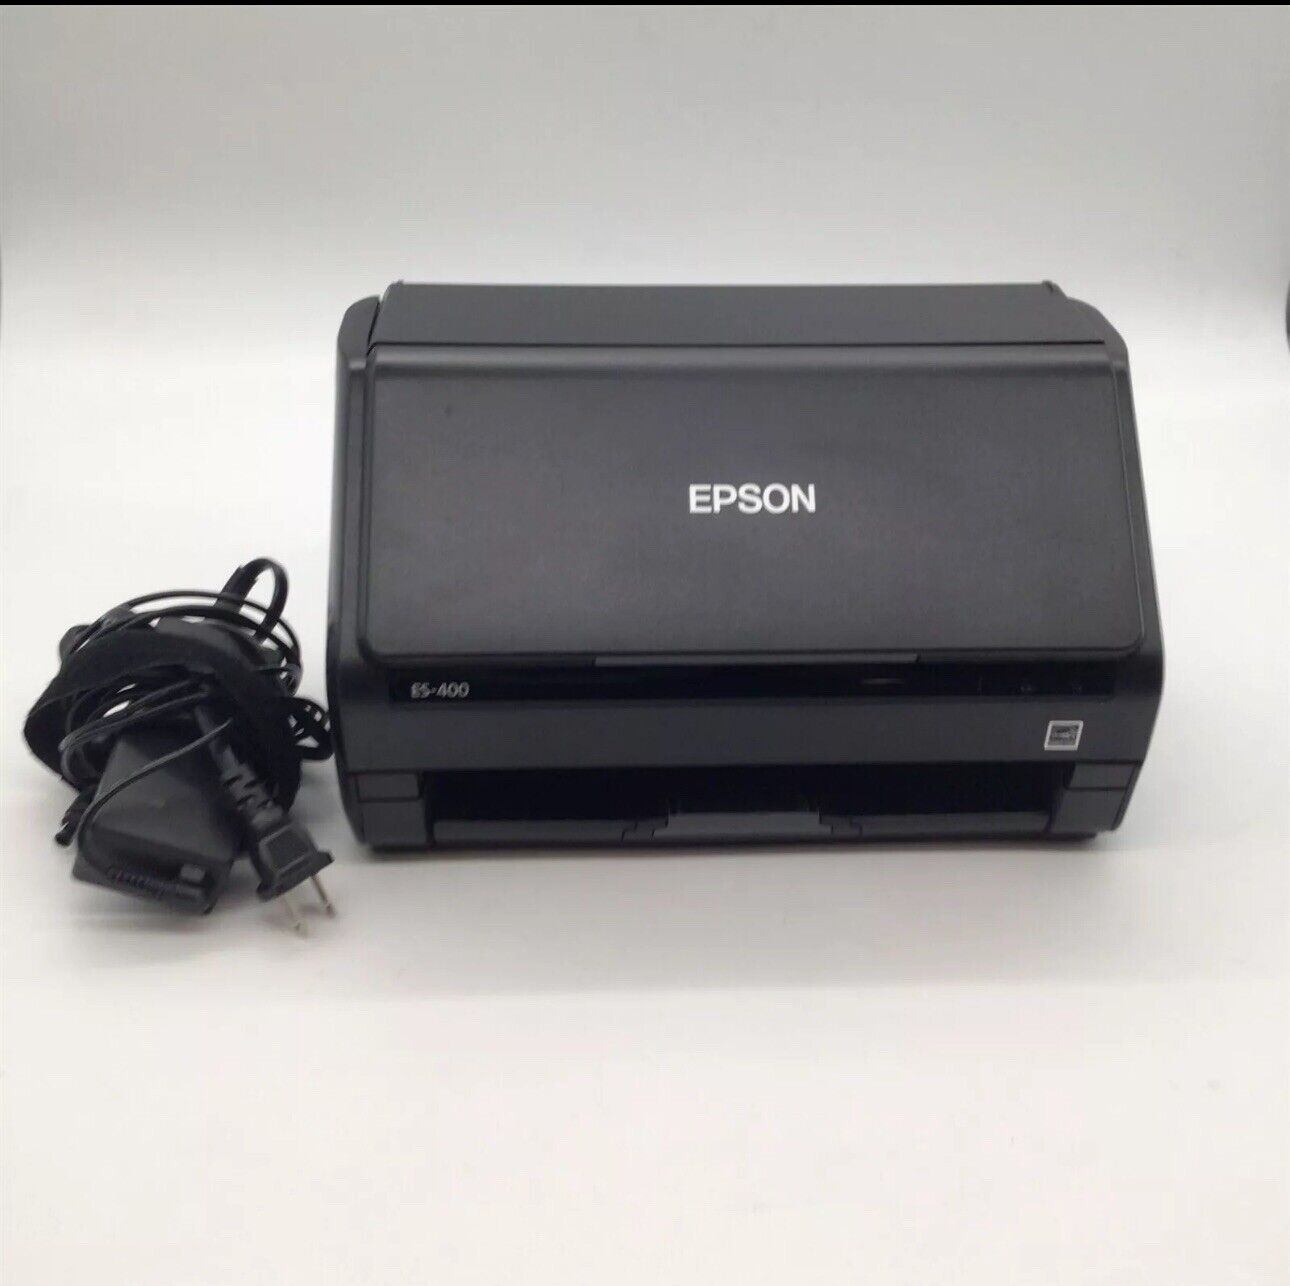 Epson WorkForce ES-400 J381A Color Duplex Document Scanner W Power Supply